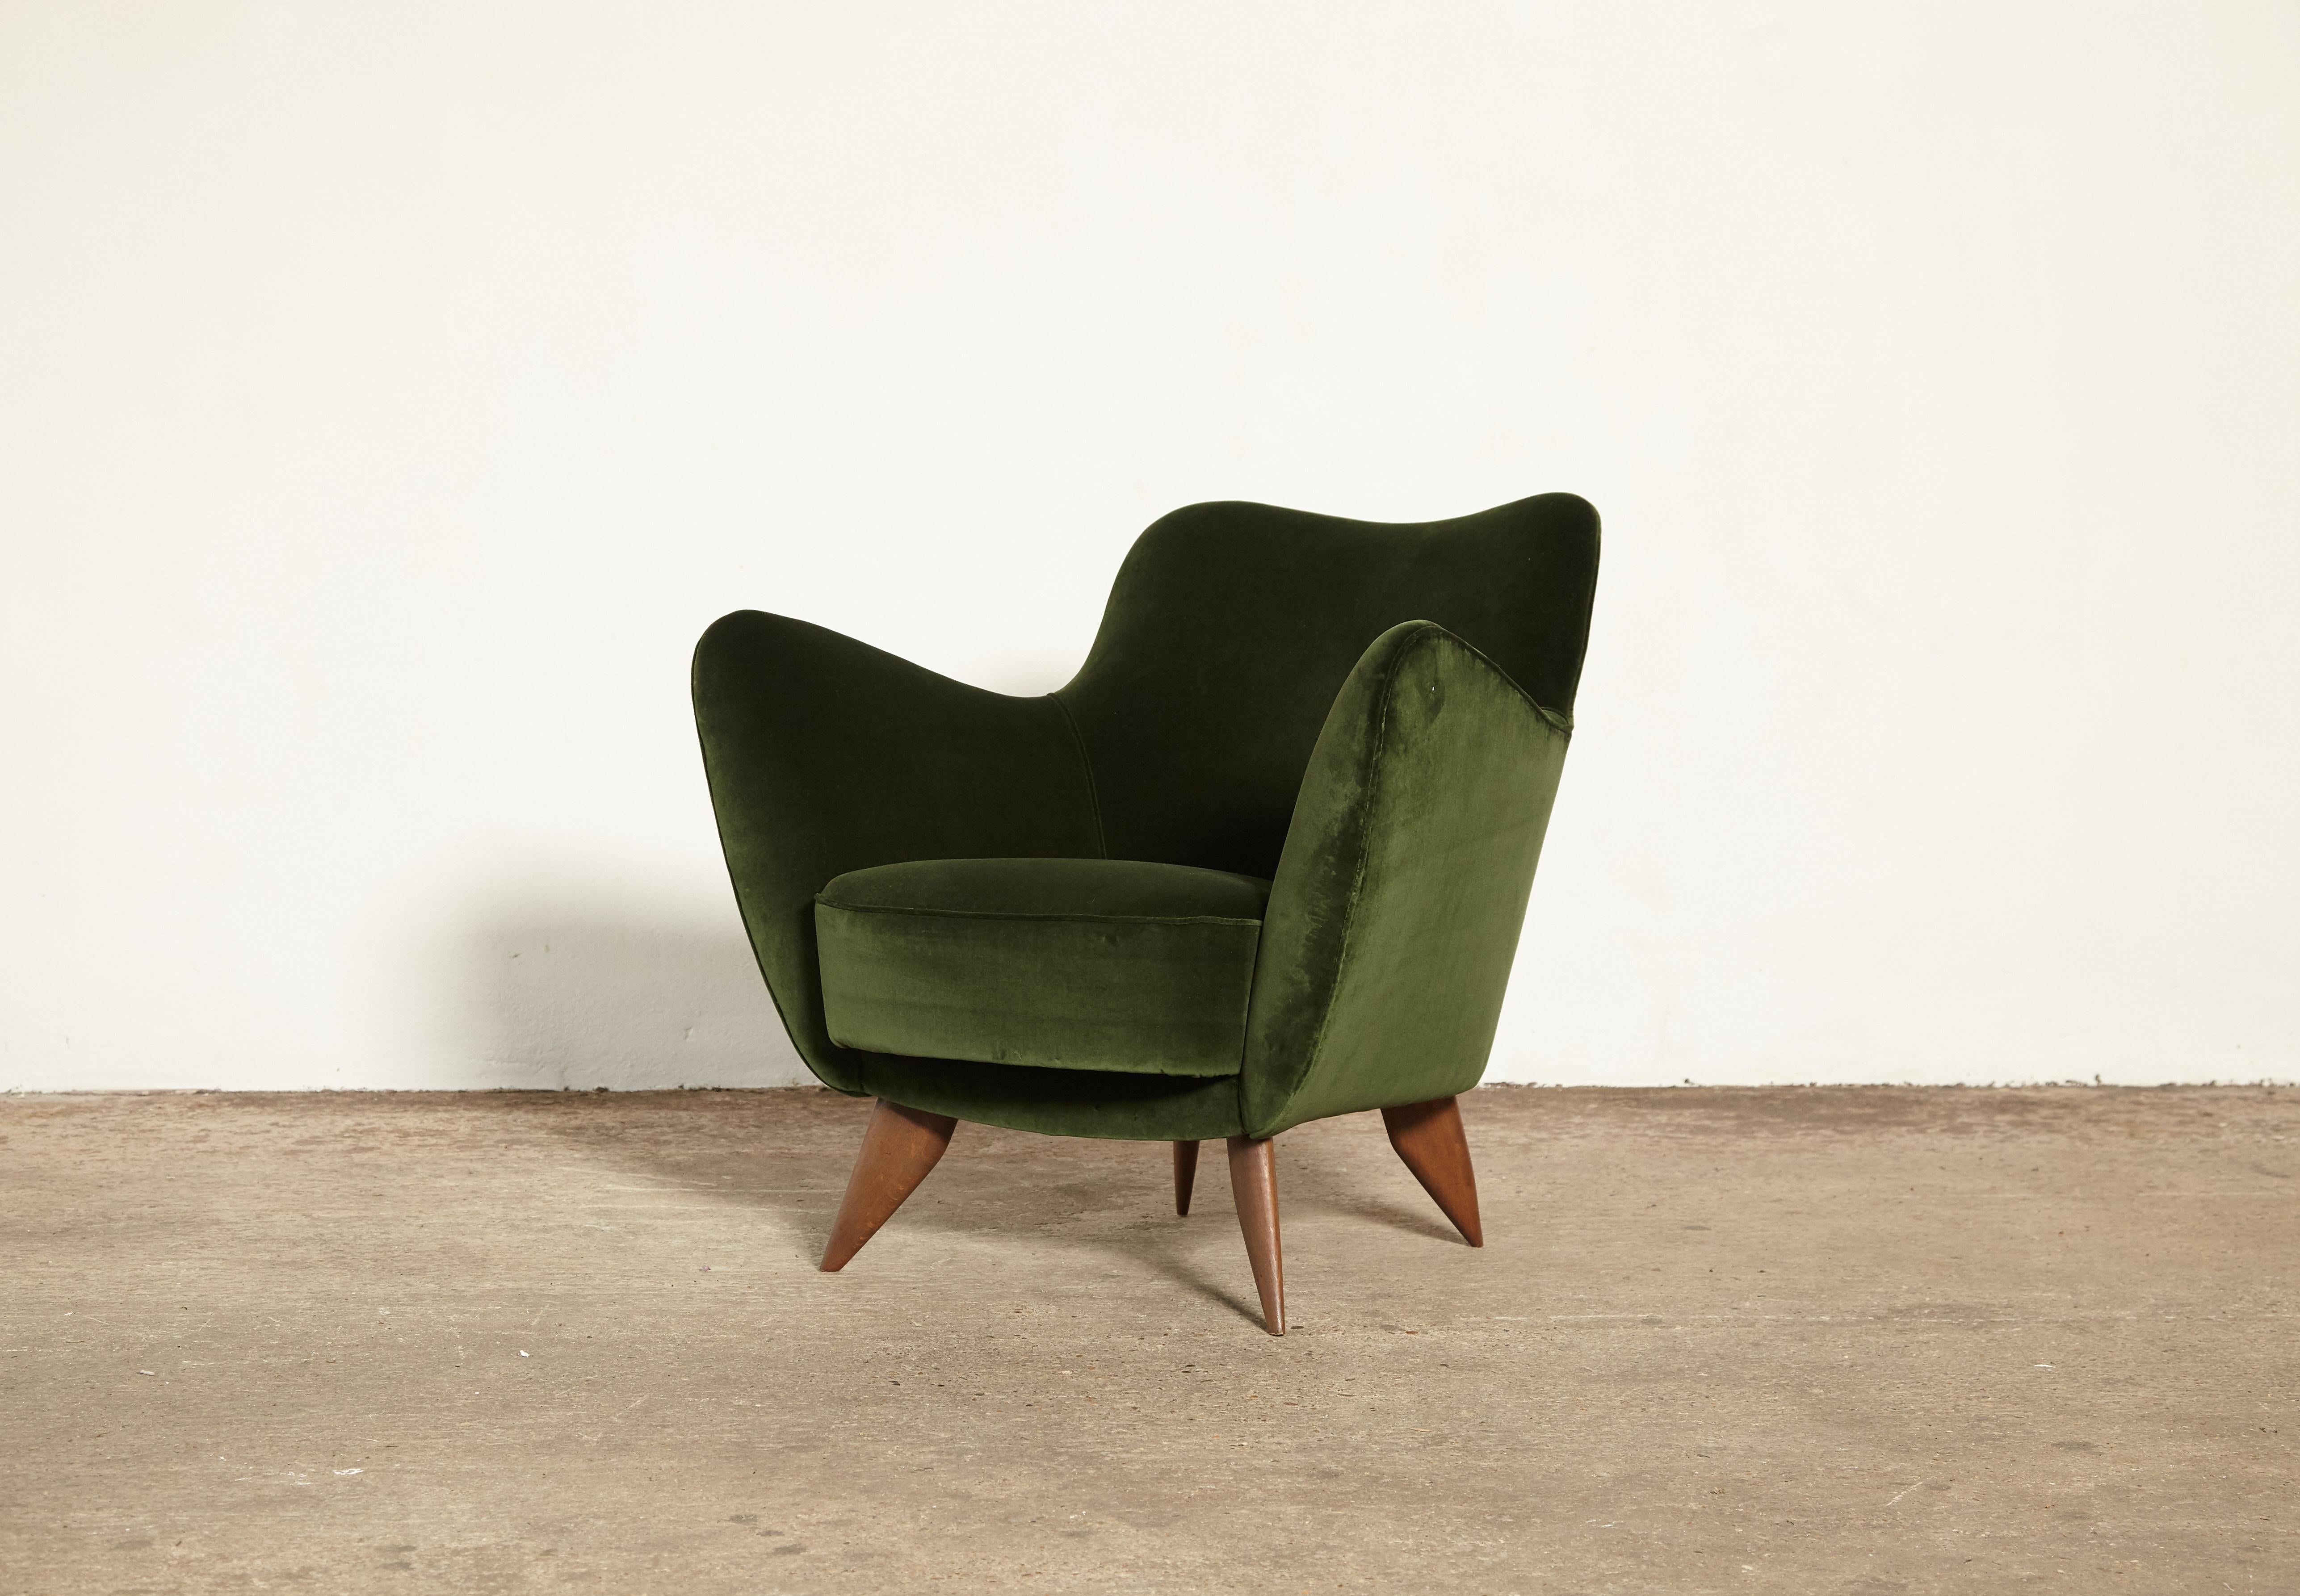 Giulia Veronesi Perla armchair, I.S.A. Bergamo, Italy, 1950s. Restored and reupholstered with emerald green velvet.